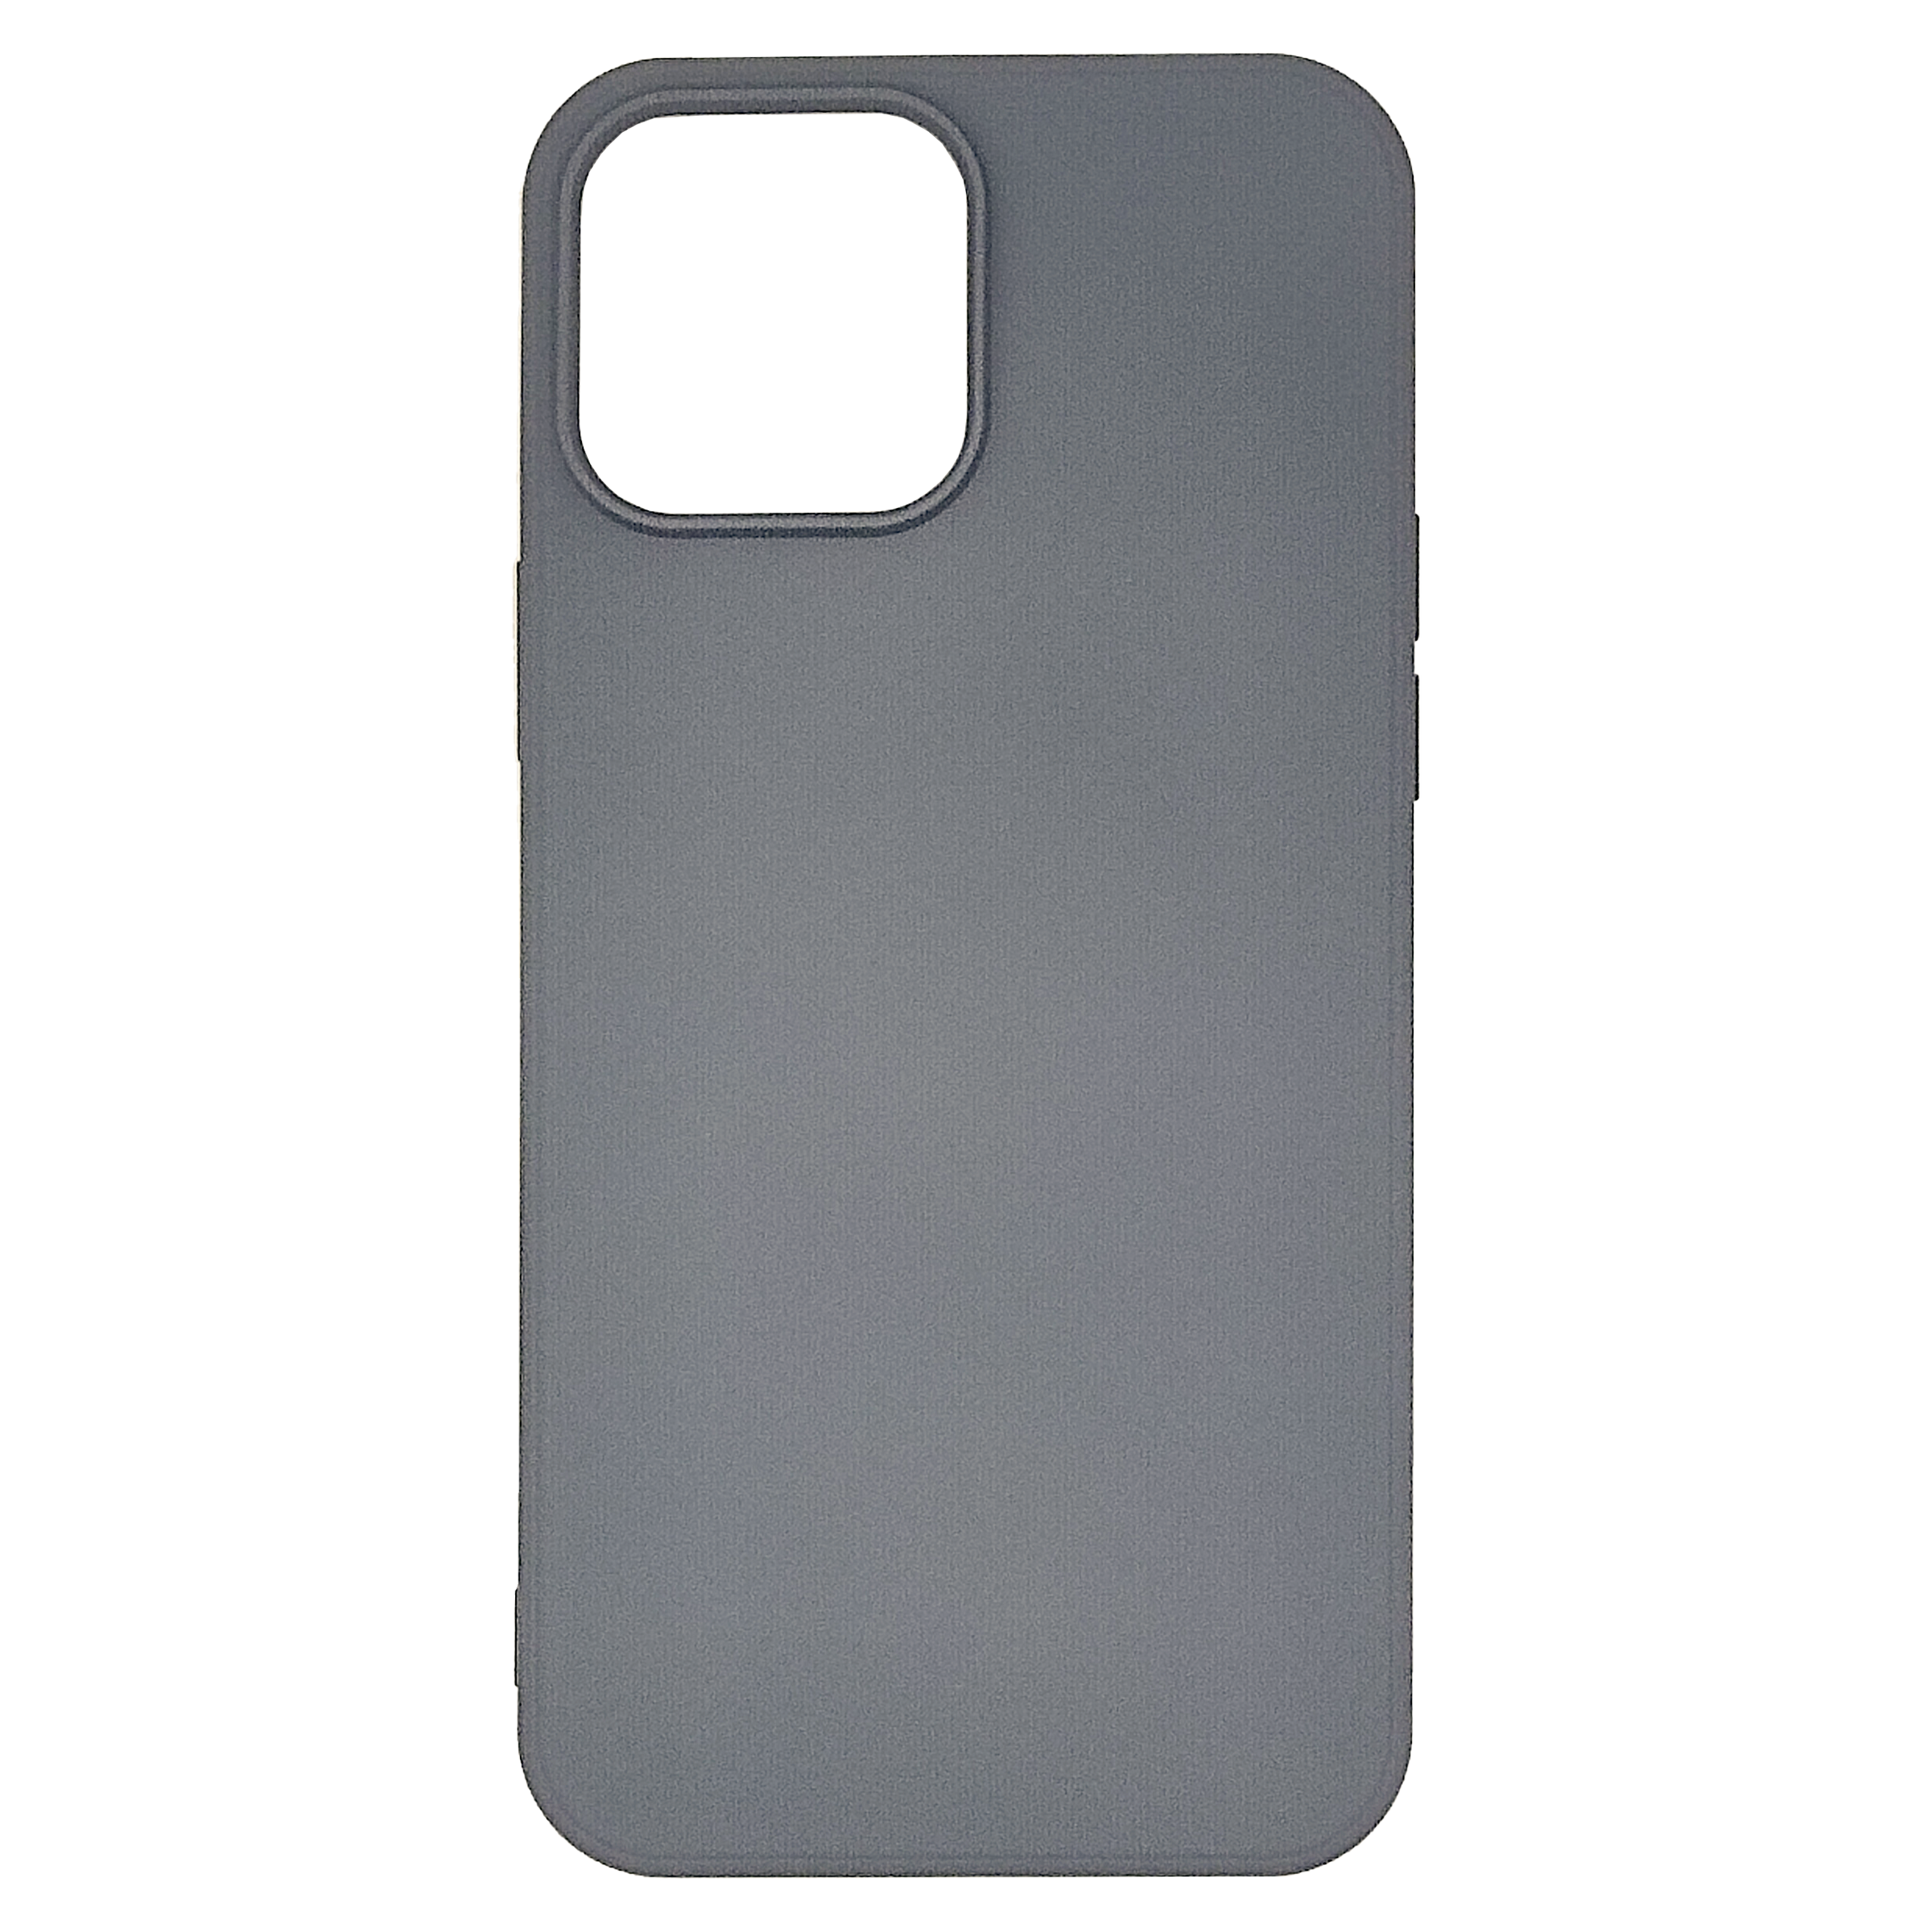 Soundrevo TPU Back Case For iPhone 13 Pro (Anti-Slip, C013P, Grey)